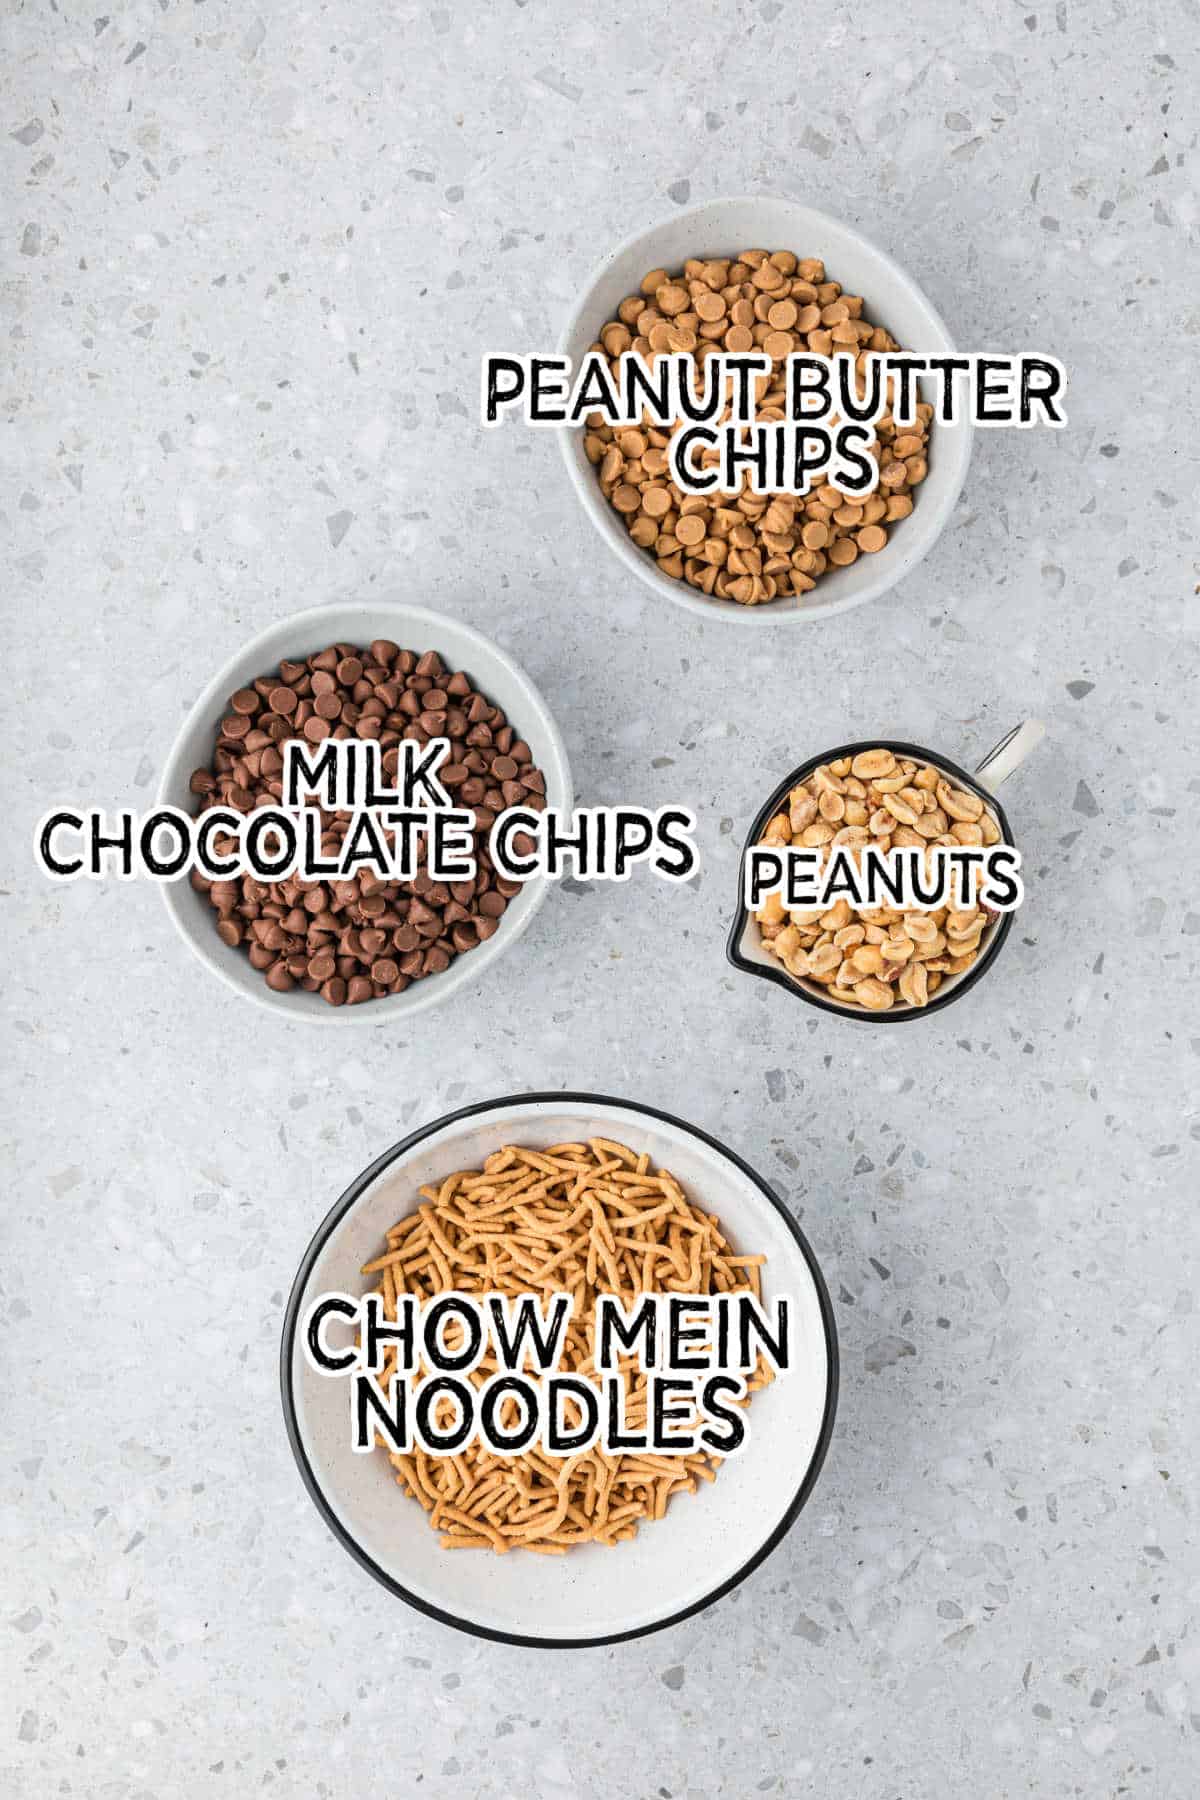 Ingredients to make no-bake chocolate peanut butter haystacks.